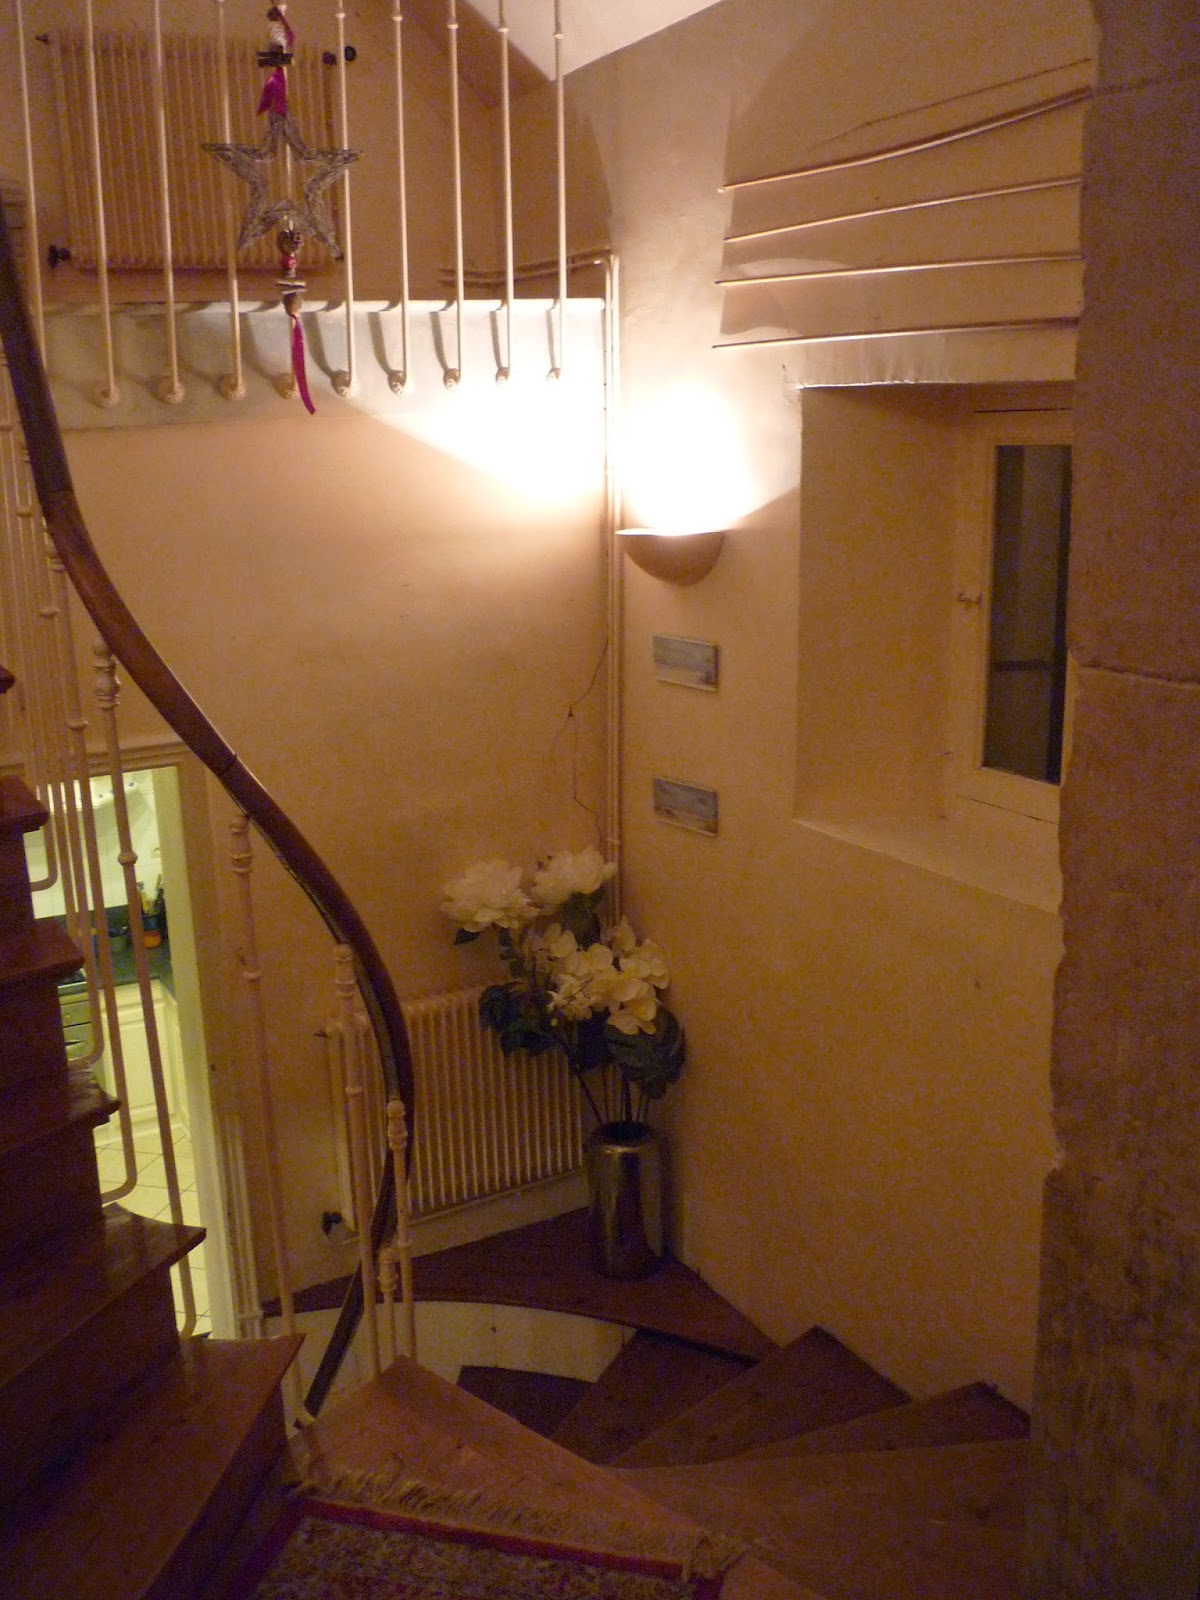 Escalier du Manoir de Beaurepaire en Normandie